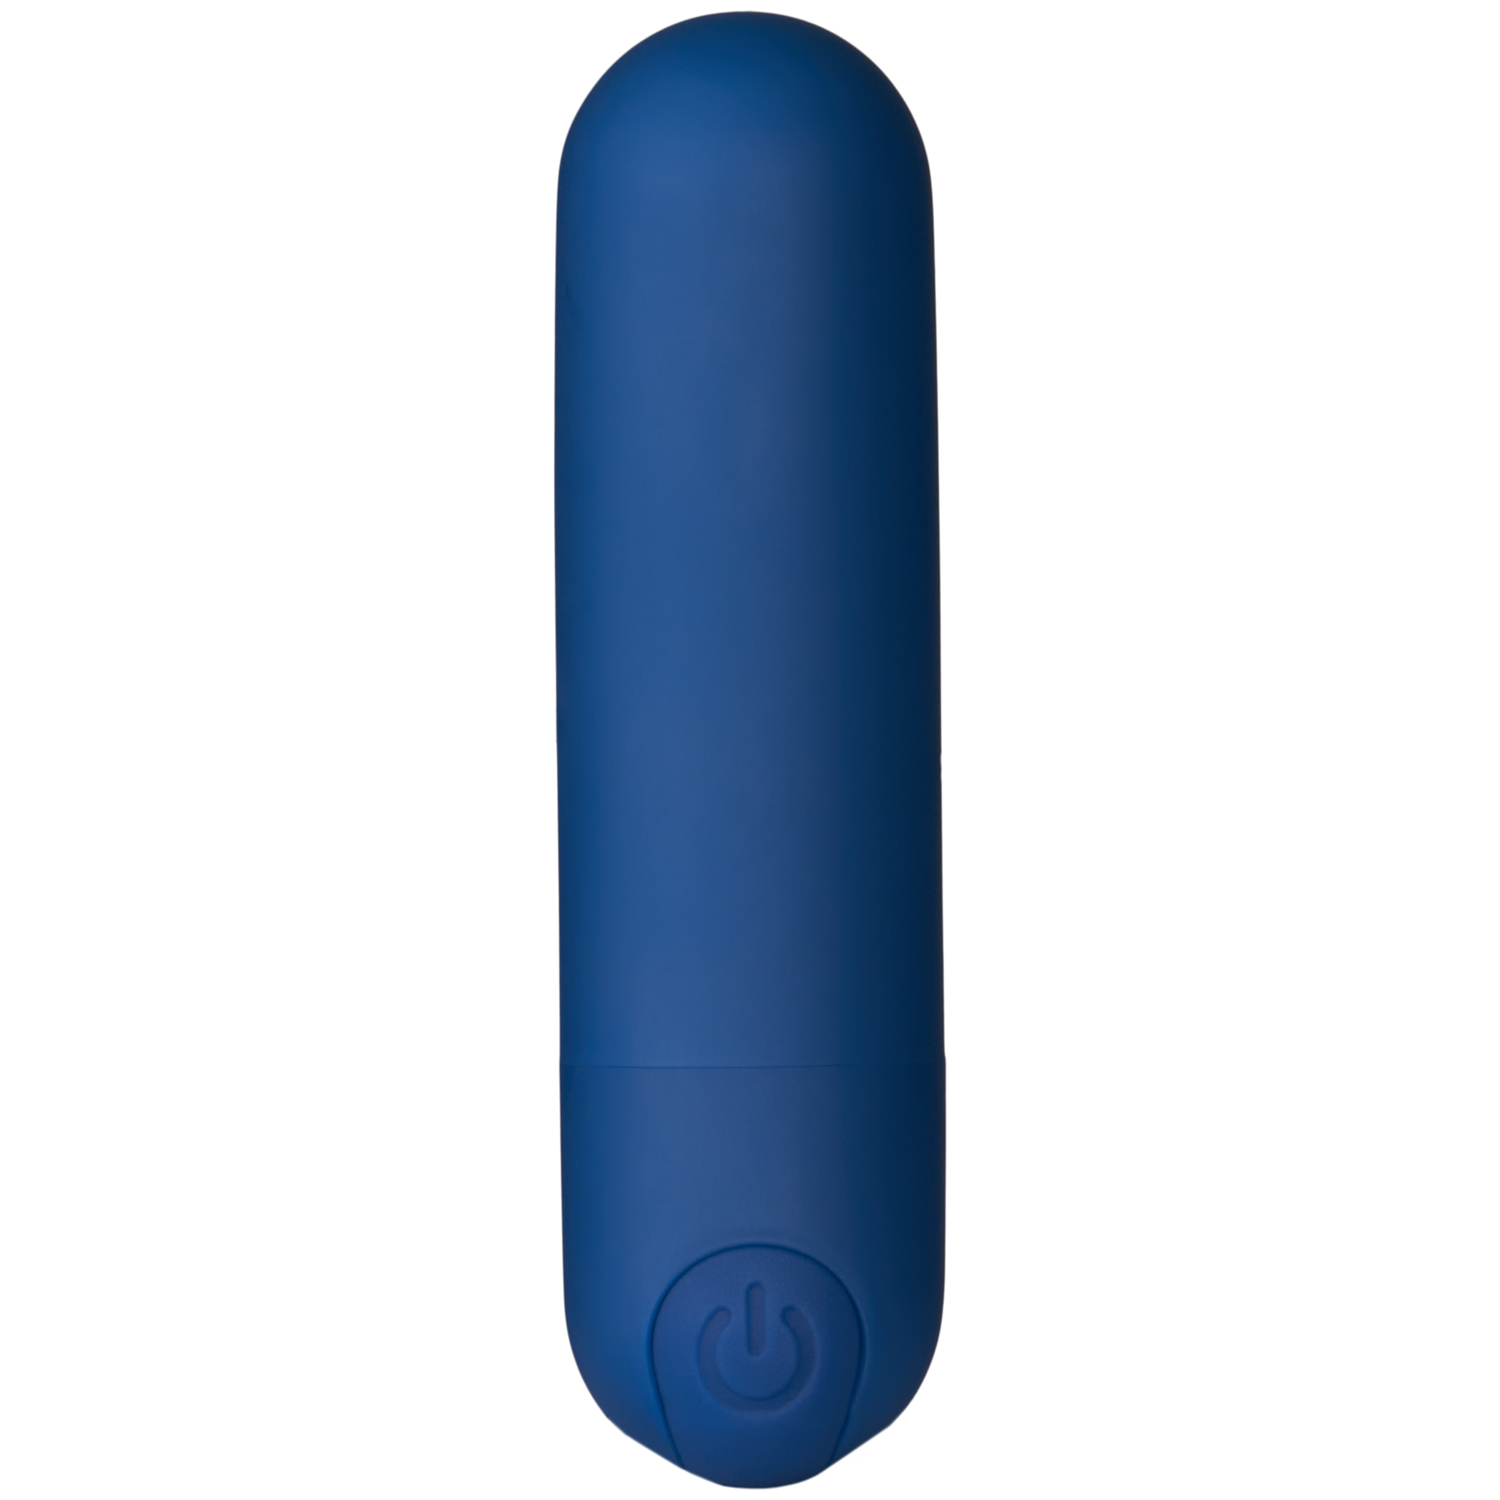 Sinful Business Blue Opladelig Power Bullet Vibrator - Blå